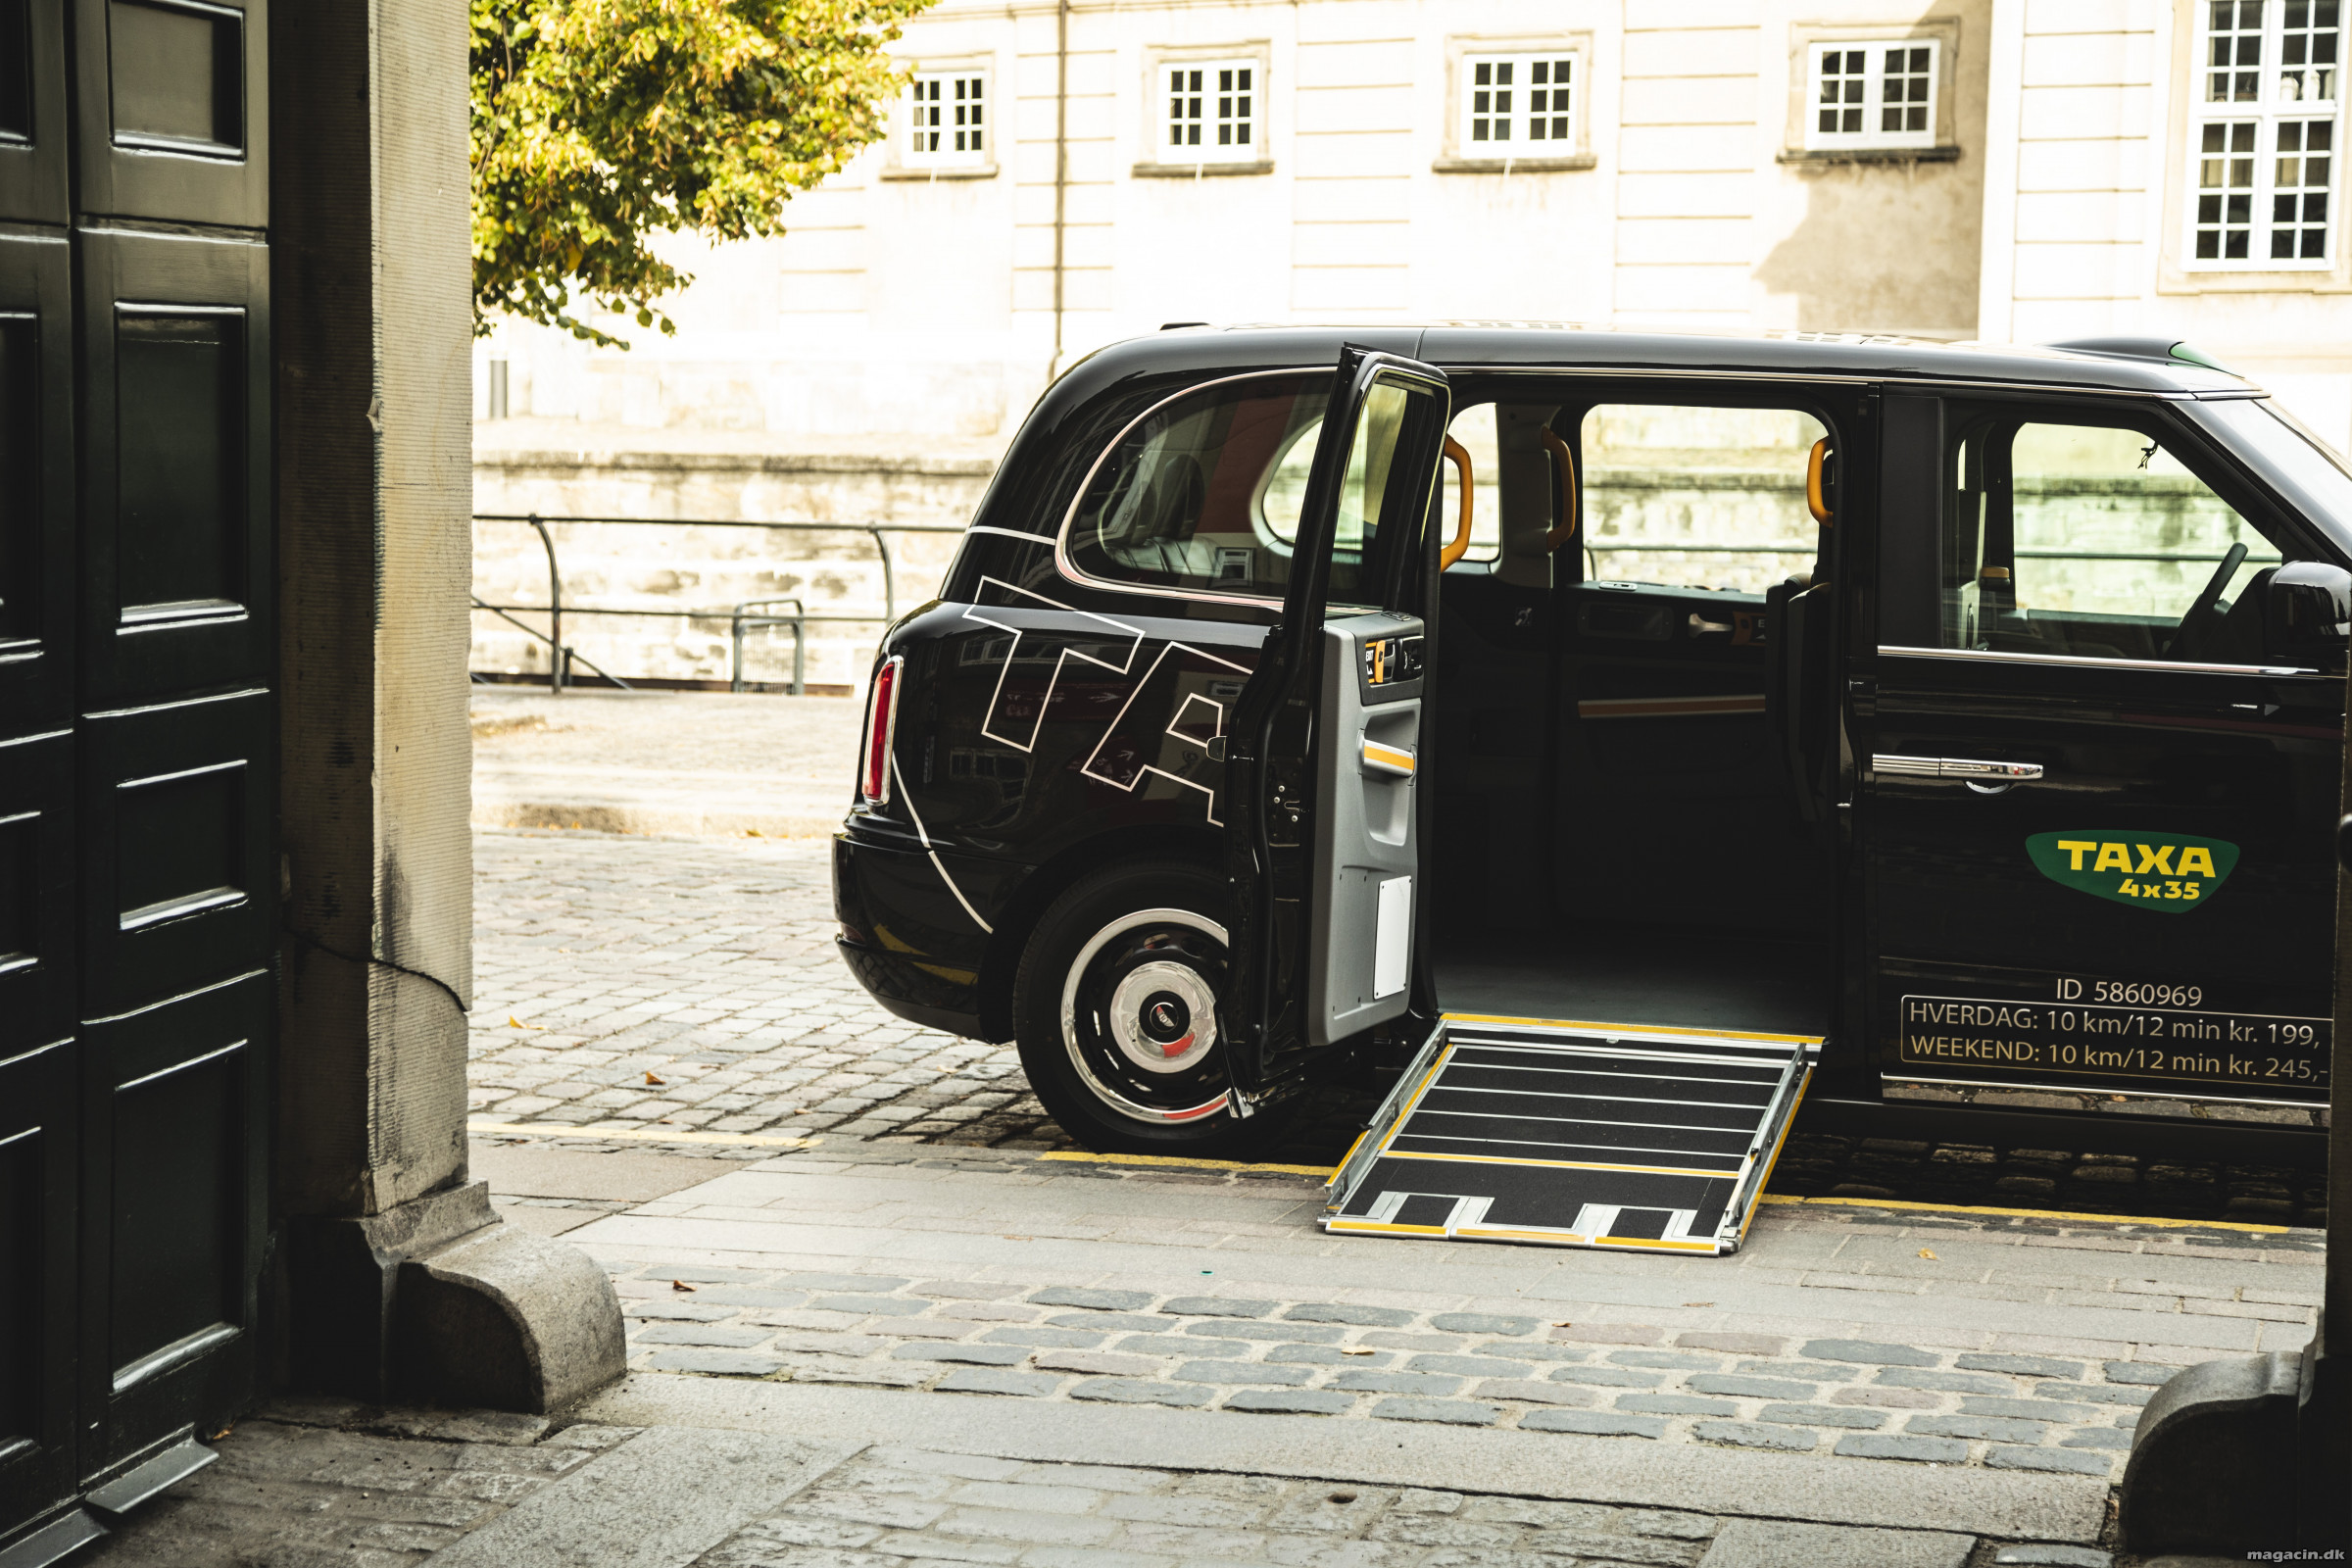 Mød Københavns nye Black Cab taxa